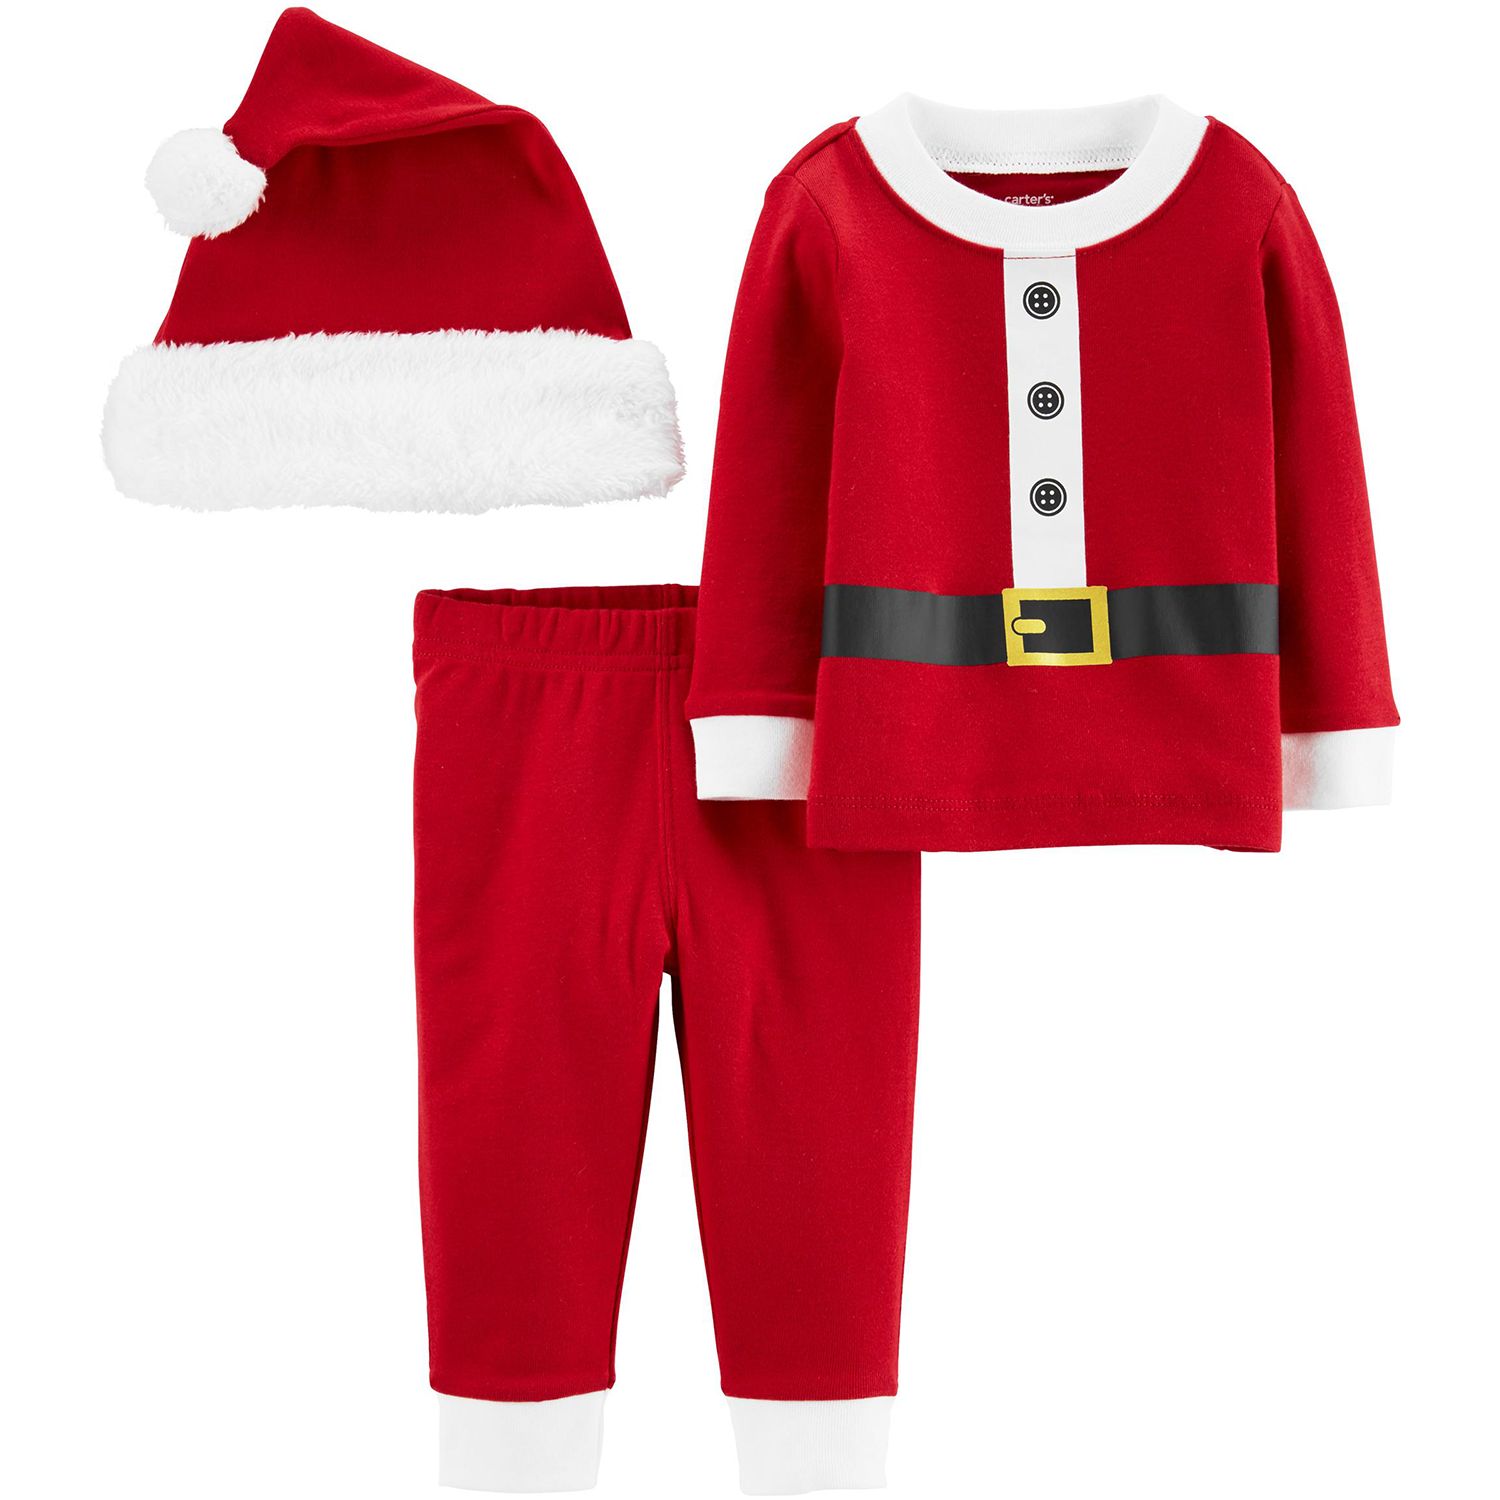 Baby Carter's 3-Piece Santa Suit Outfit